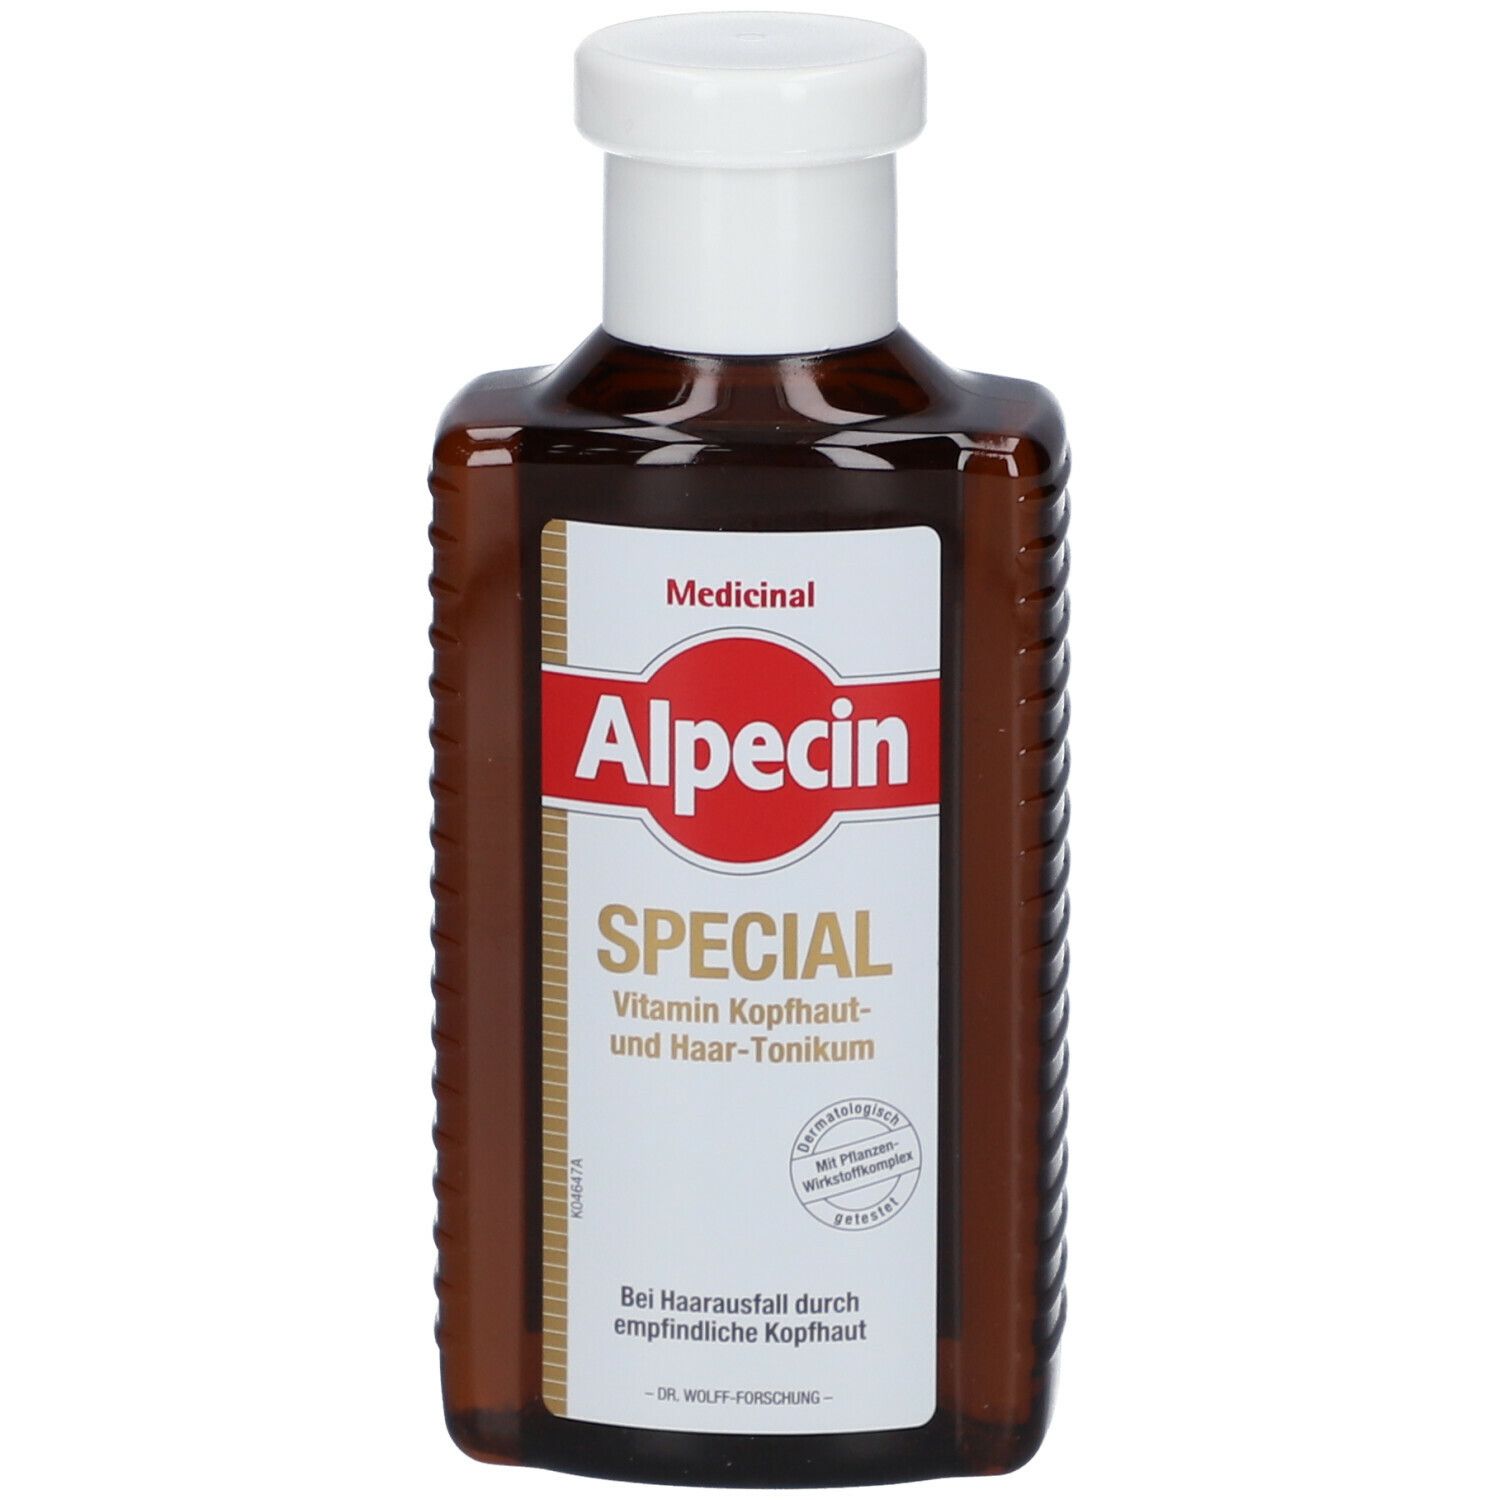 Image of Alpecin Medicinal SPECIAL Vitamin Kopfhaut und Haar-Tonikum